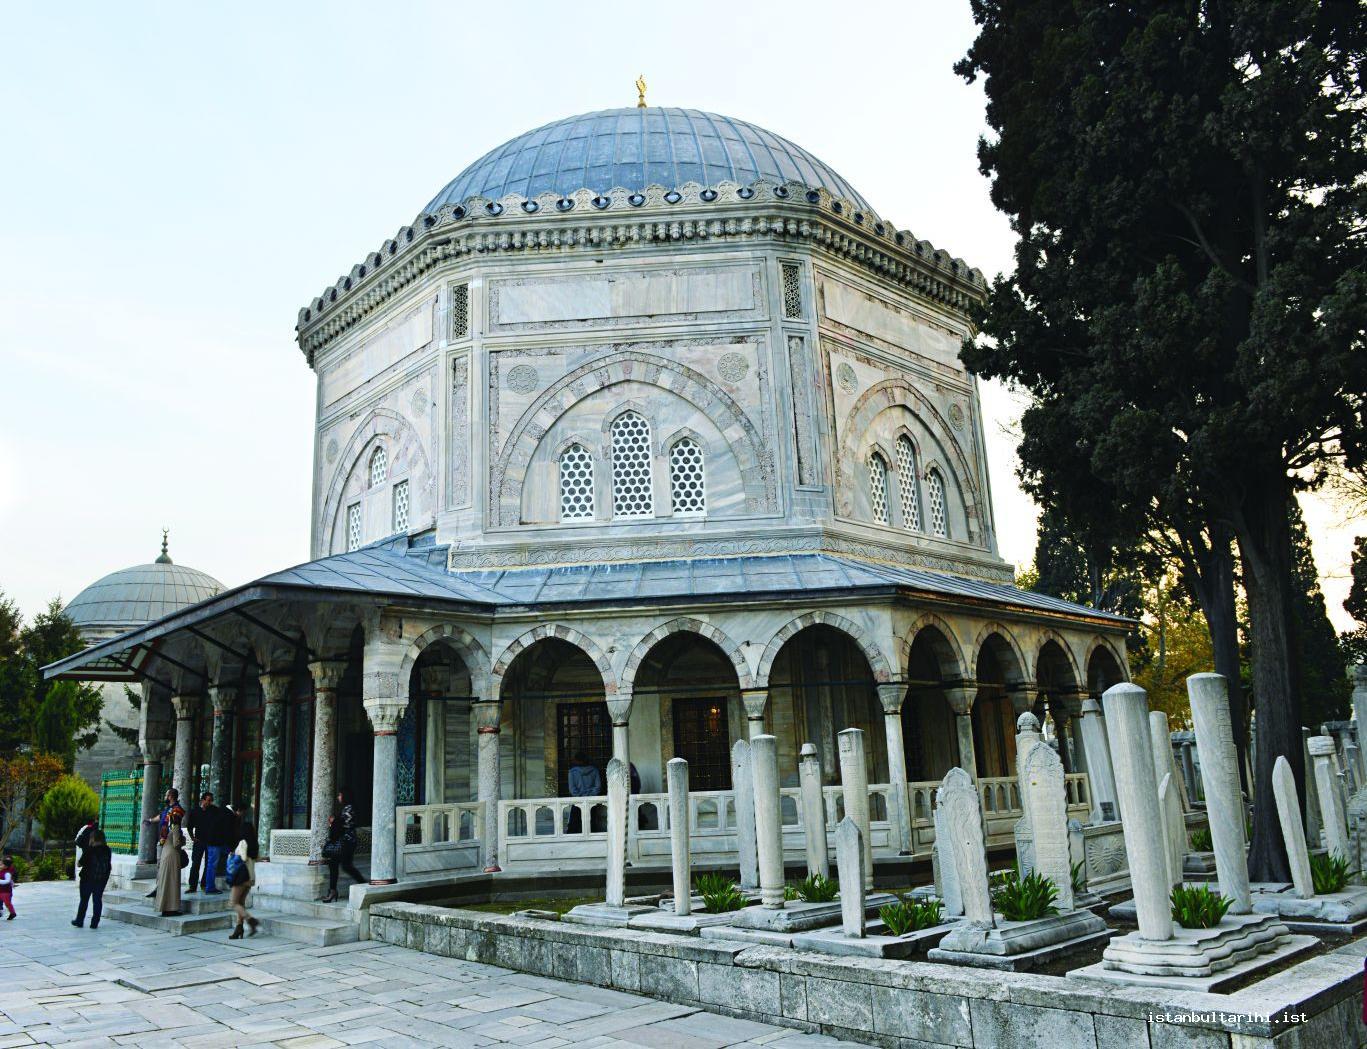 5- The tomb of Sultan Süleyman I  